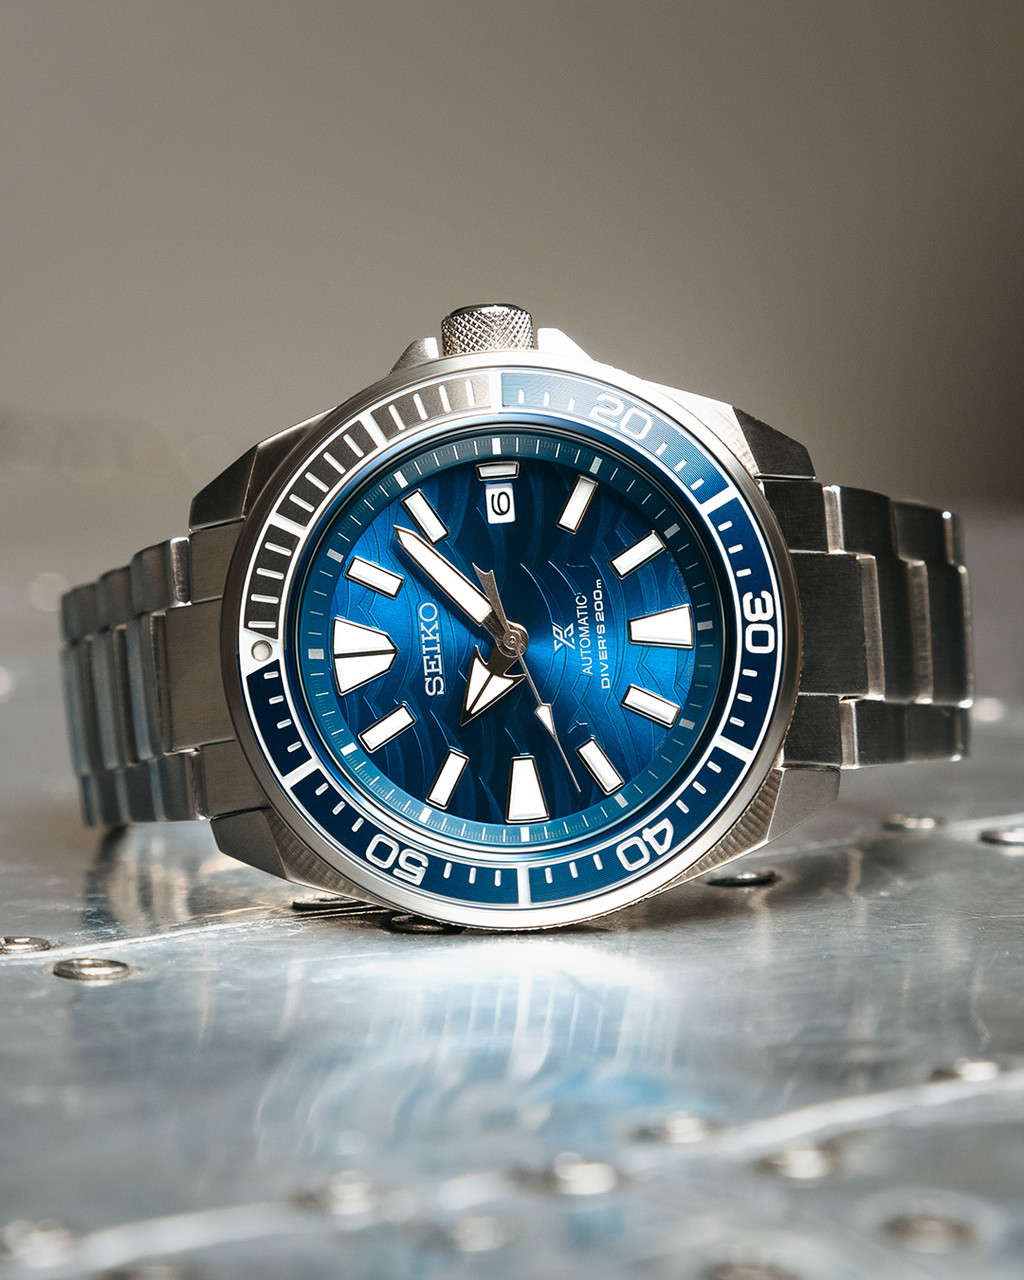 Sturmanskie Commemorative Limited Edition Watch